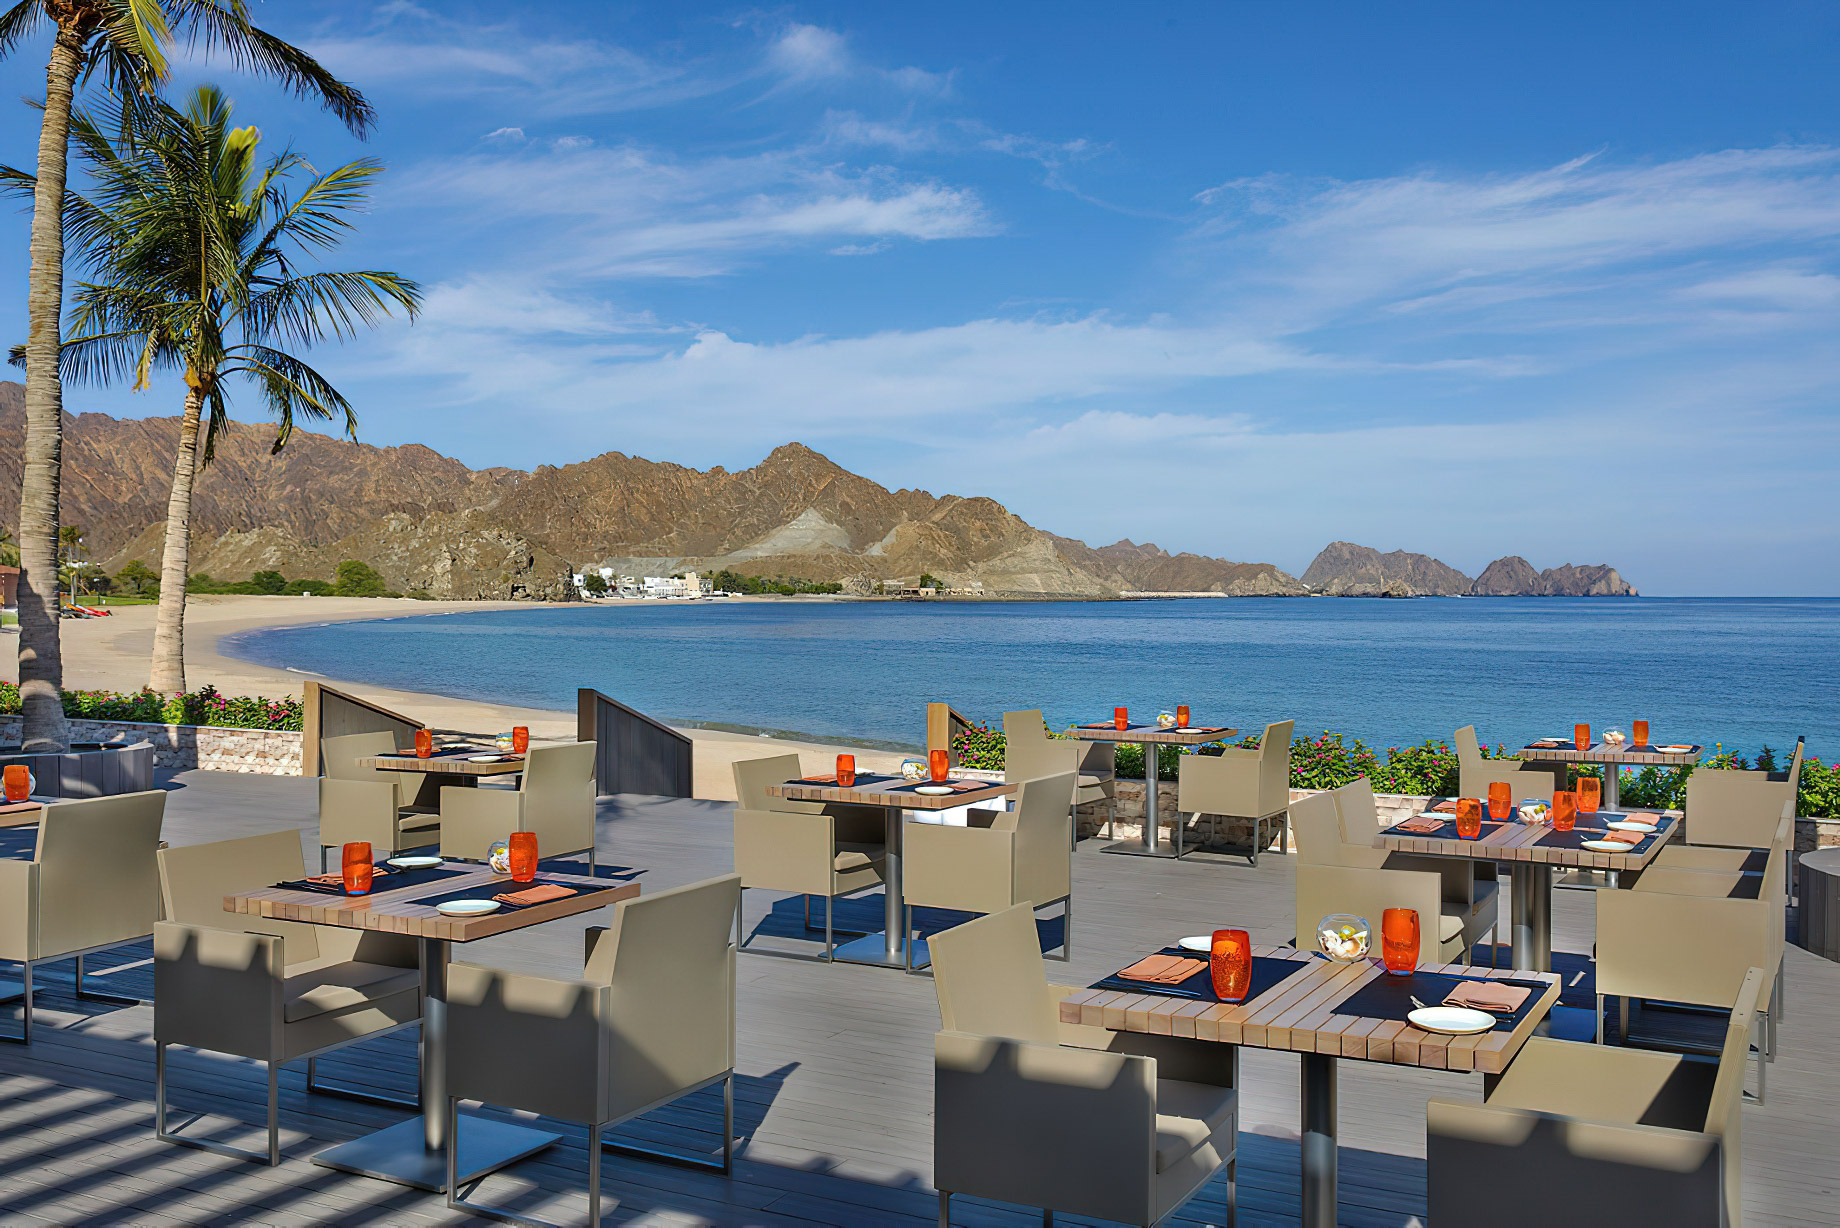 Al Bustan Palace, A Ritz-Carlton Hotel – Muscat, Oman – Beach Pavilion Bar & Grill Terrace